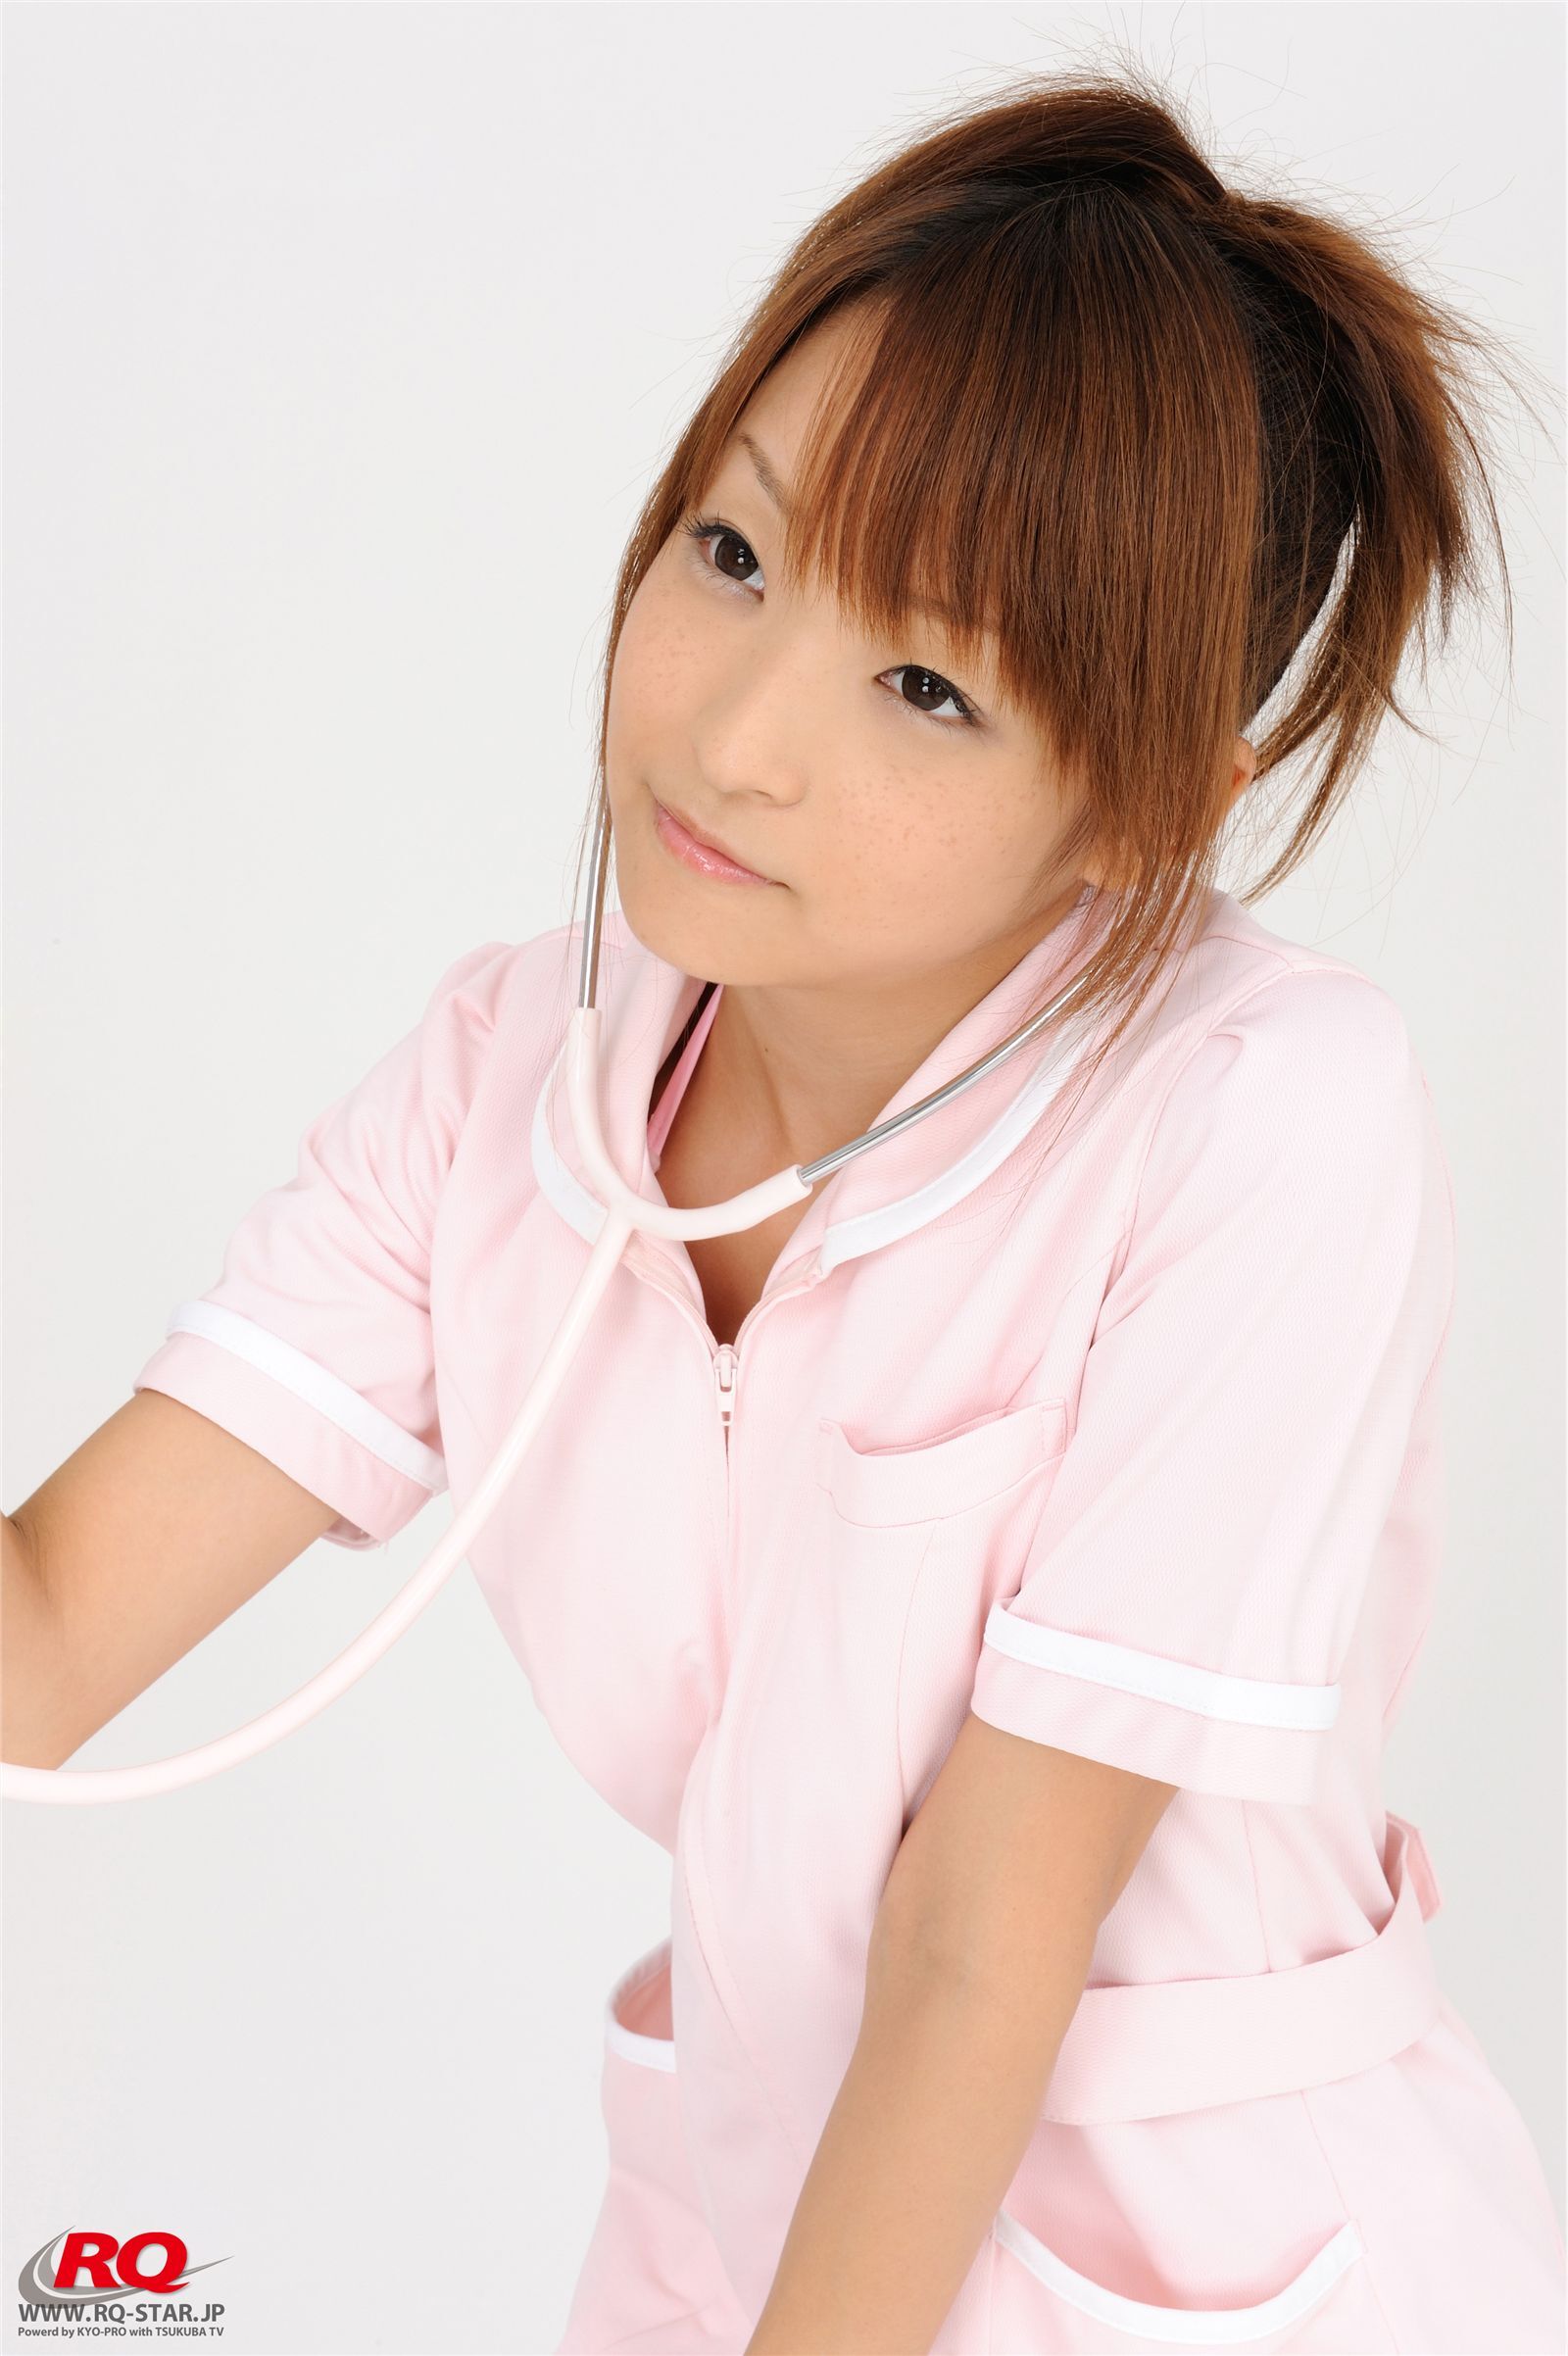 Mio Aoki no.00083 rq-star Japan HD uniform beauty photo